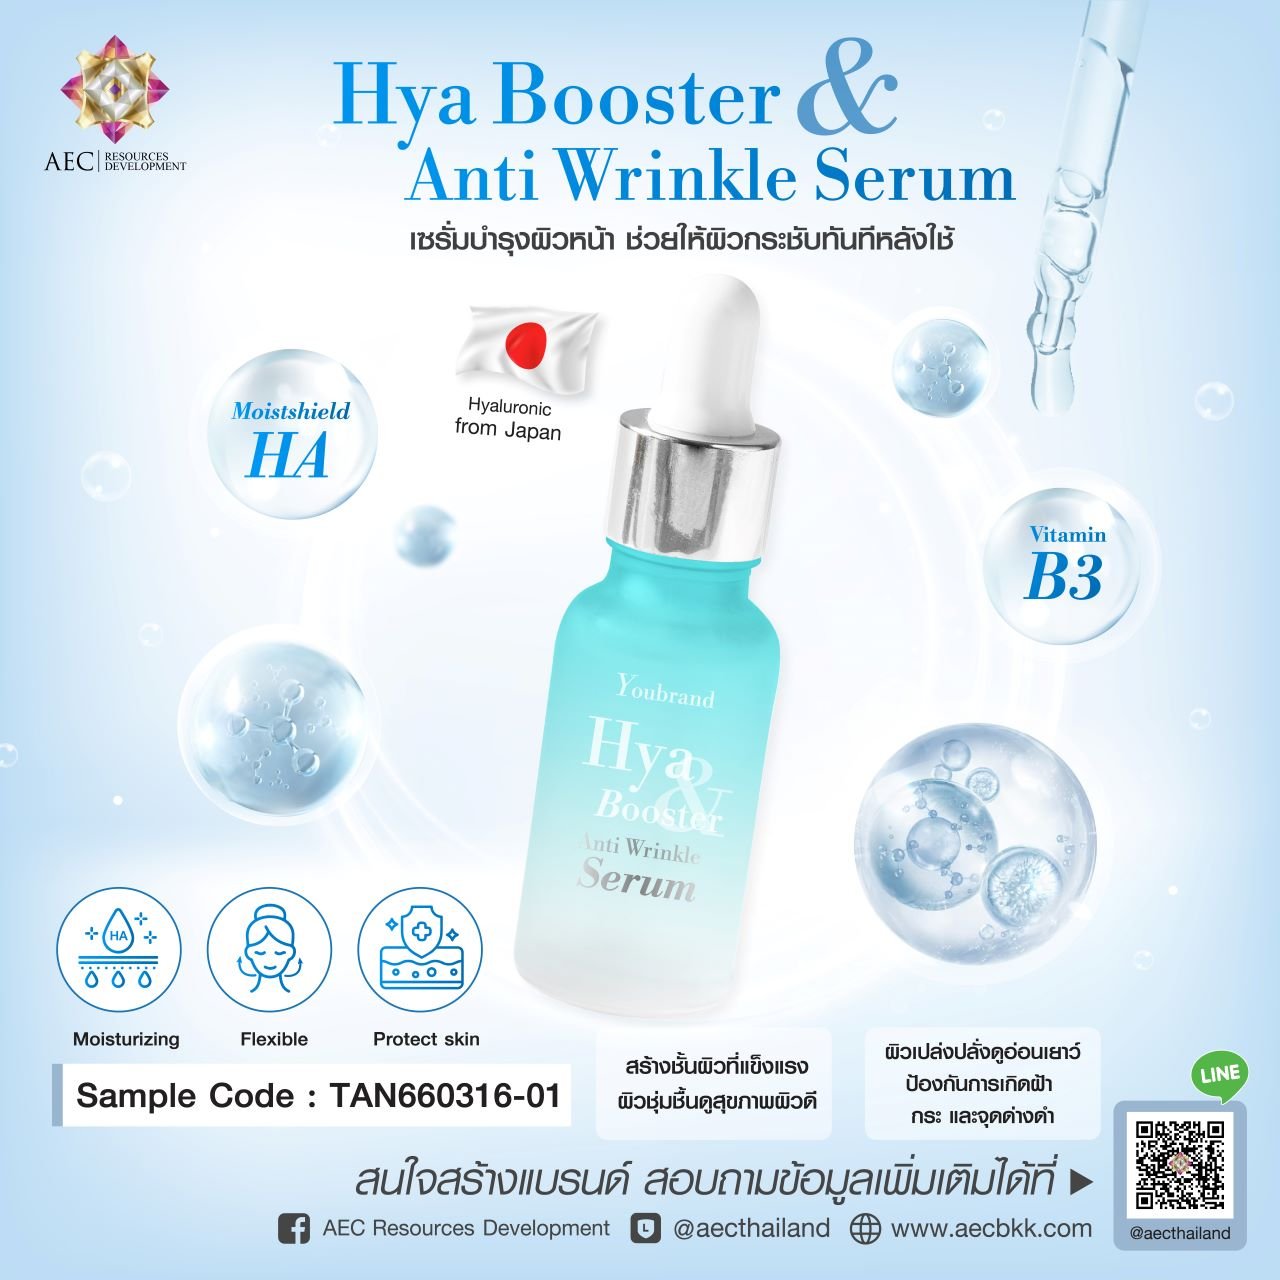 Hya Booster & Anti Wrinkle Serum